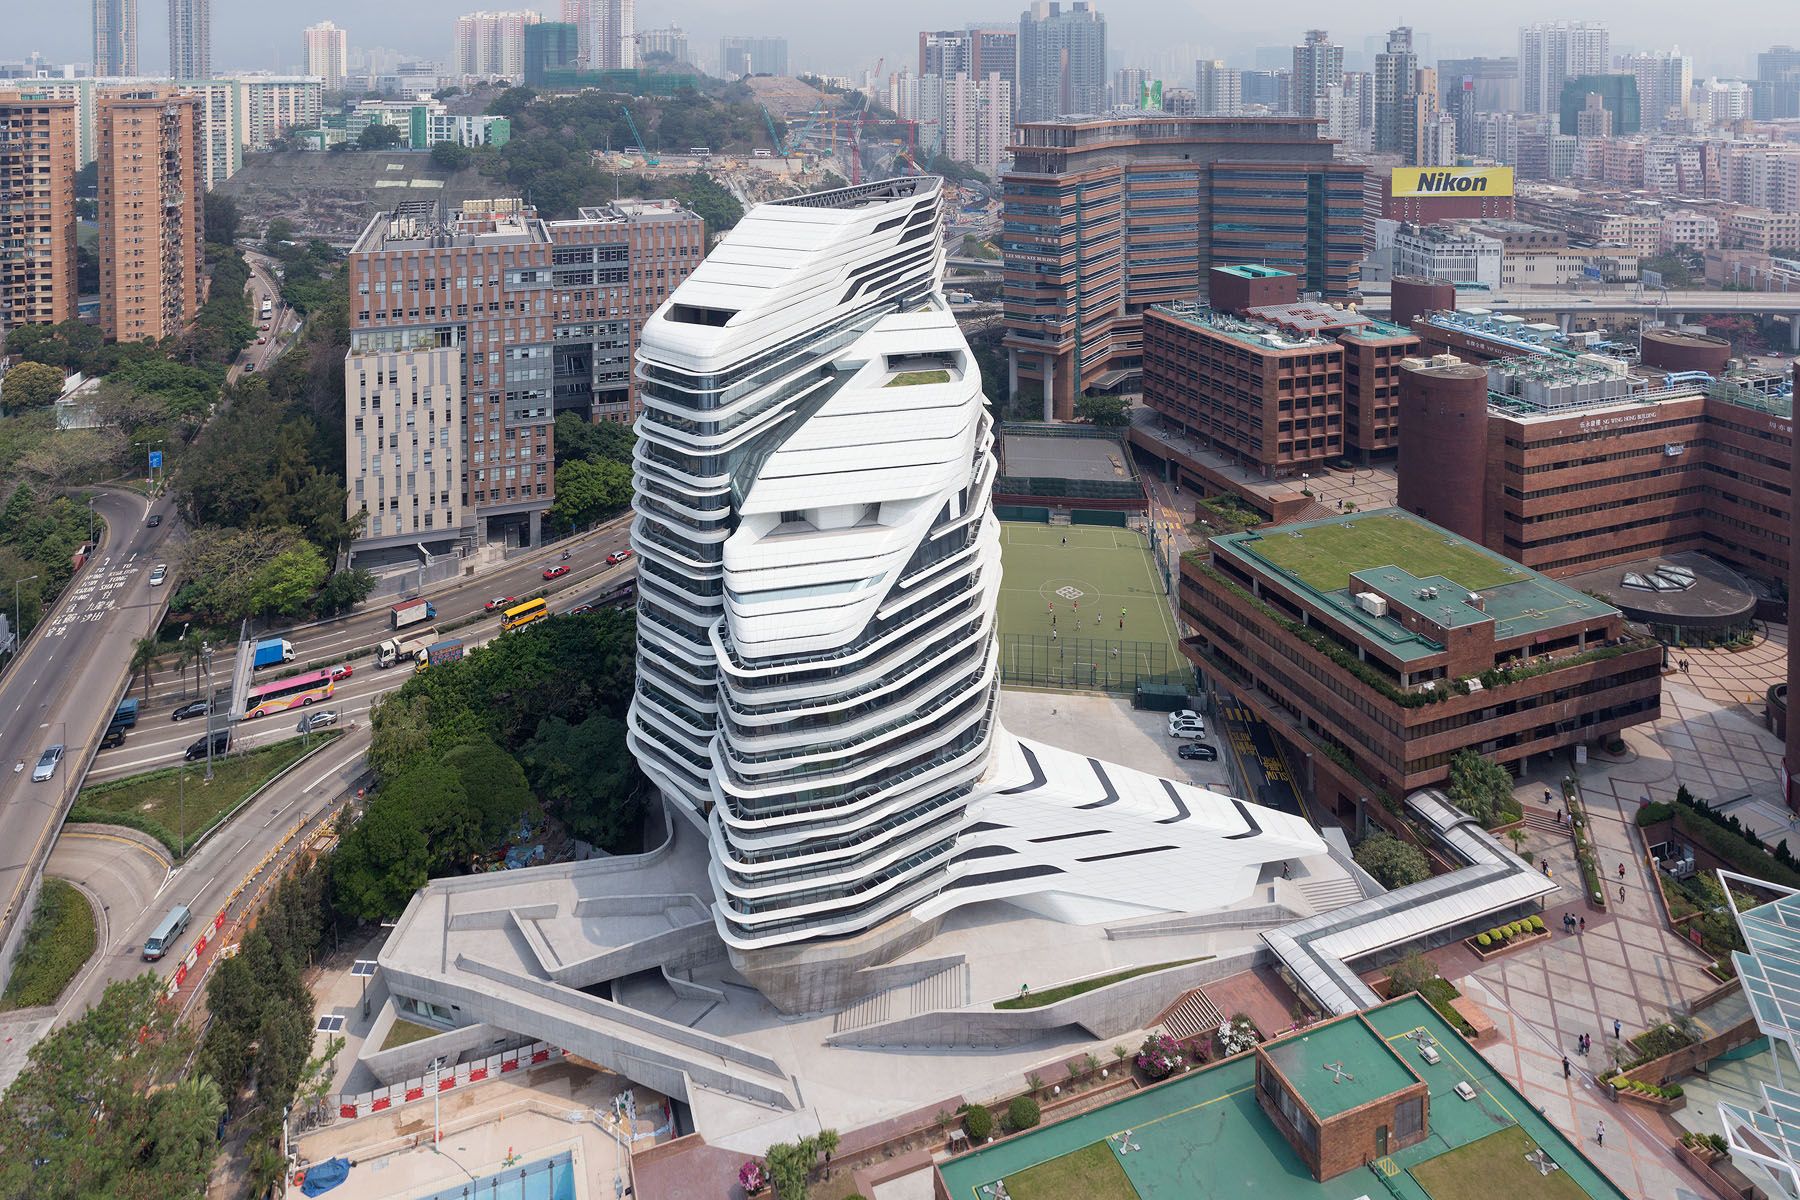 Jockey Club Innovation Tower, Hong Kong Polytechnic University – Zaha Hadid